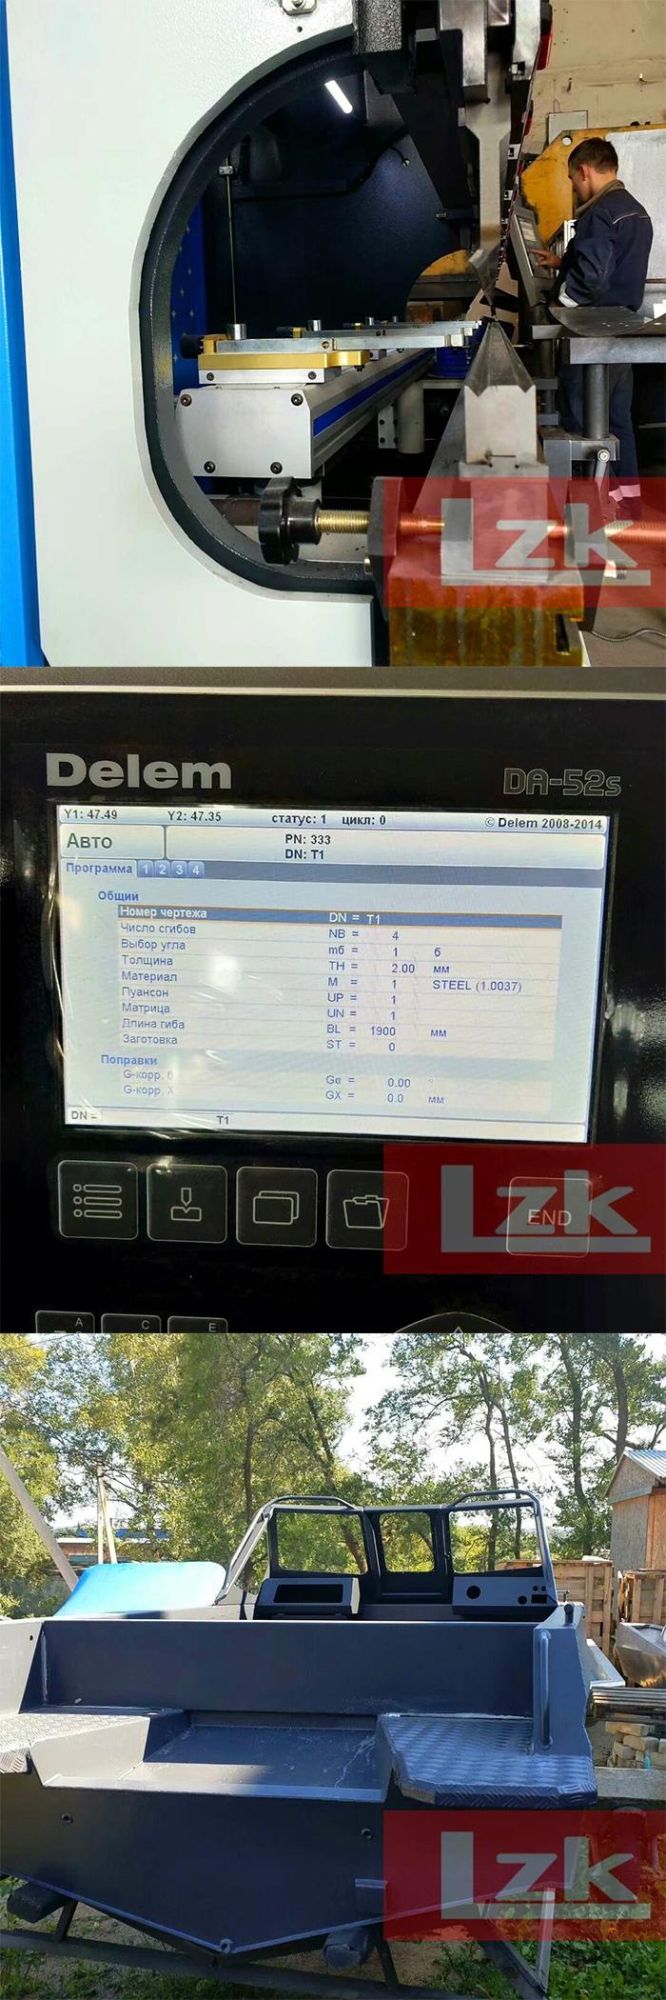 Lzk Metal Sheet Automatic Bending Machine for 6mm Steel